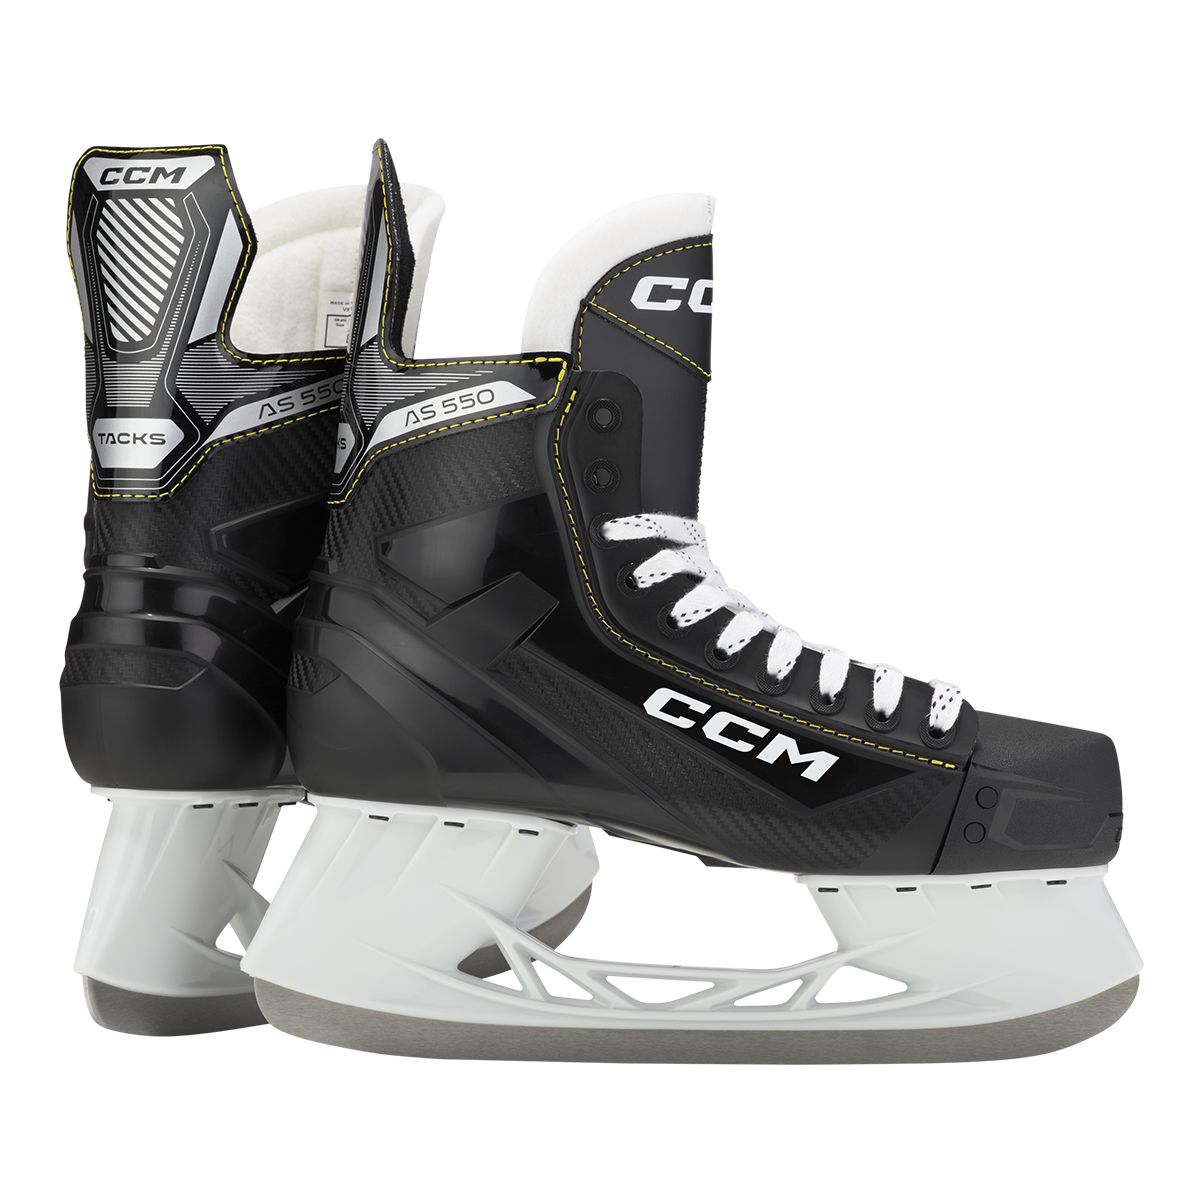 Image of CCM Tacks AS 550 Intermediate Hockey Skates